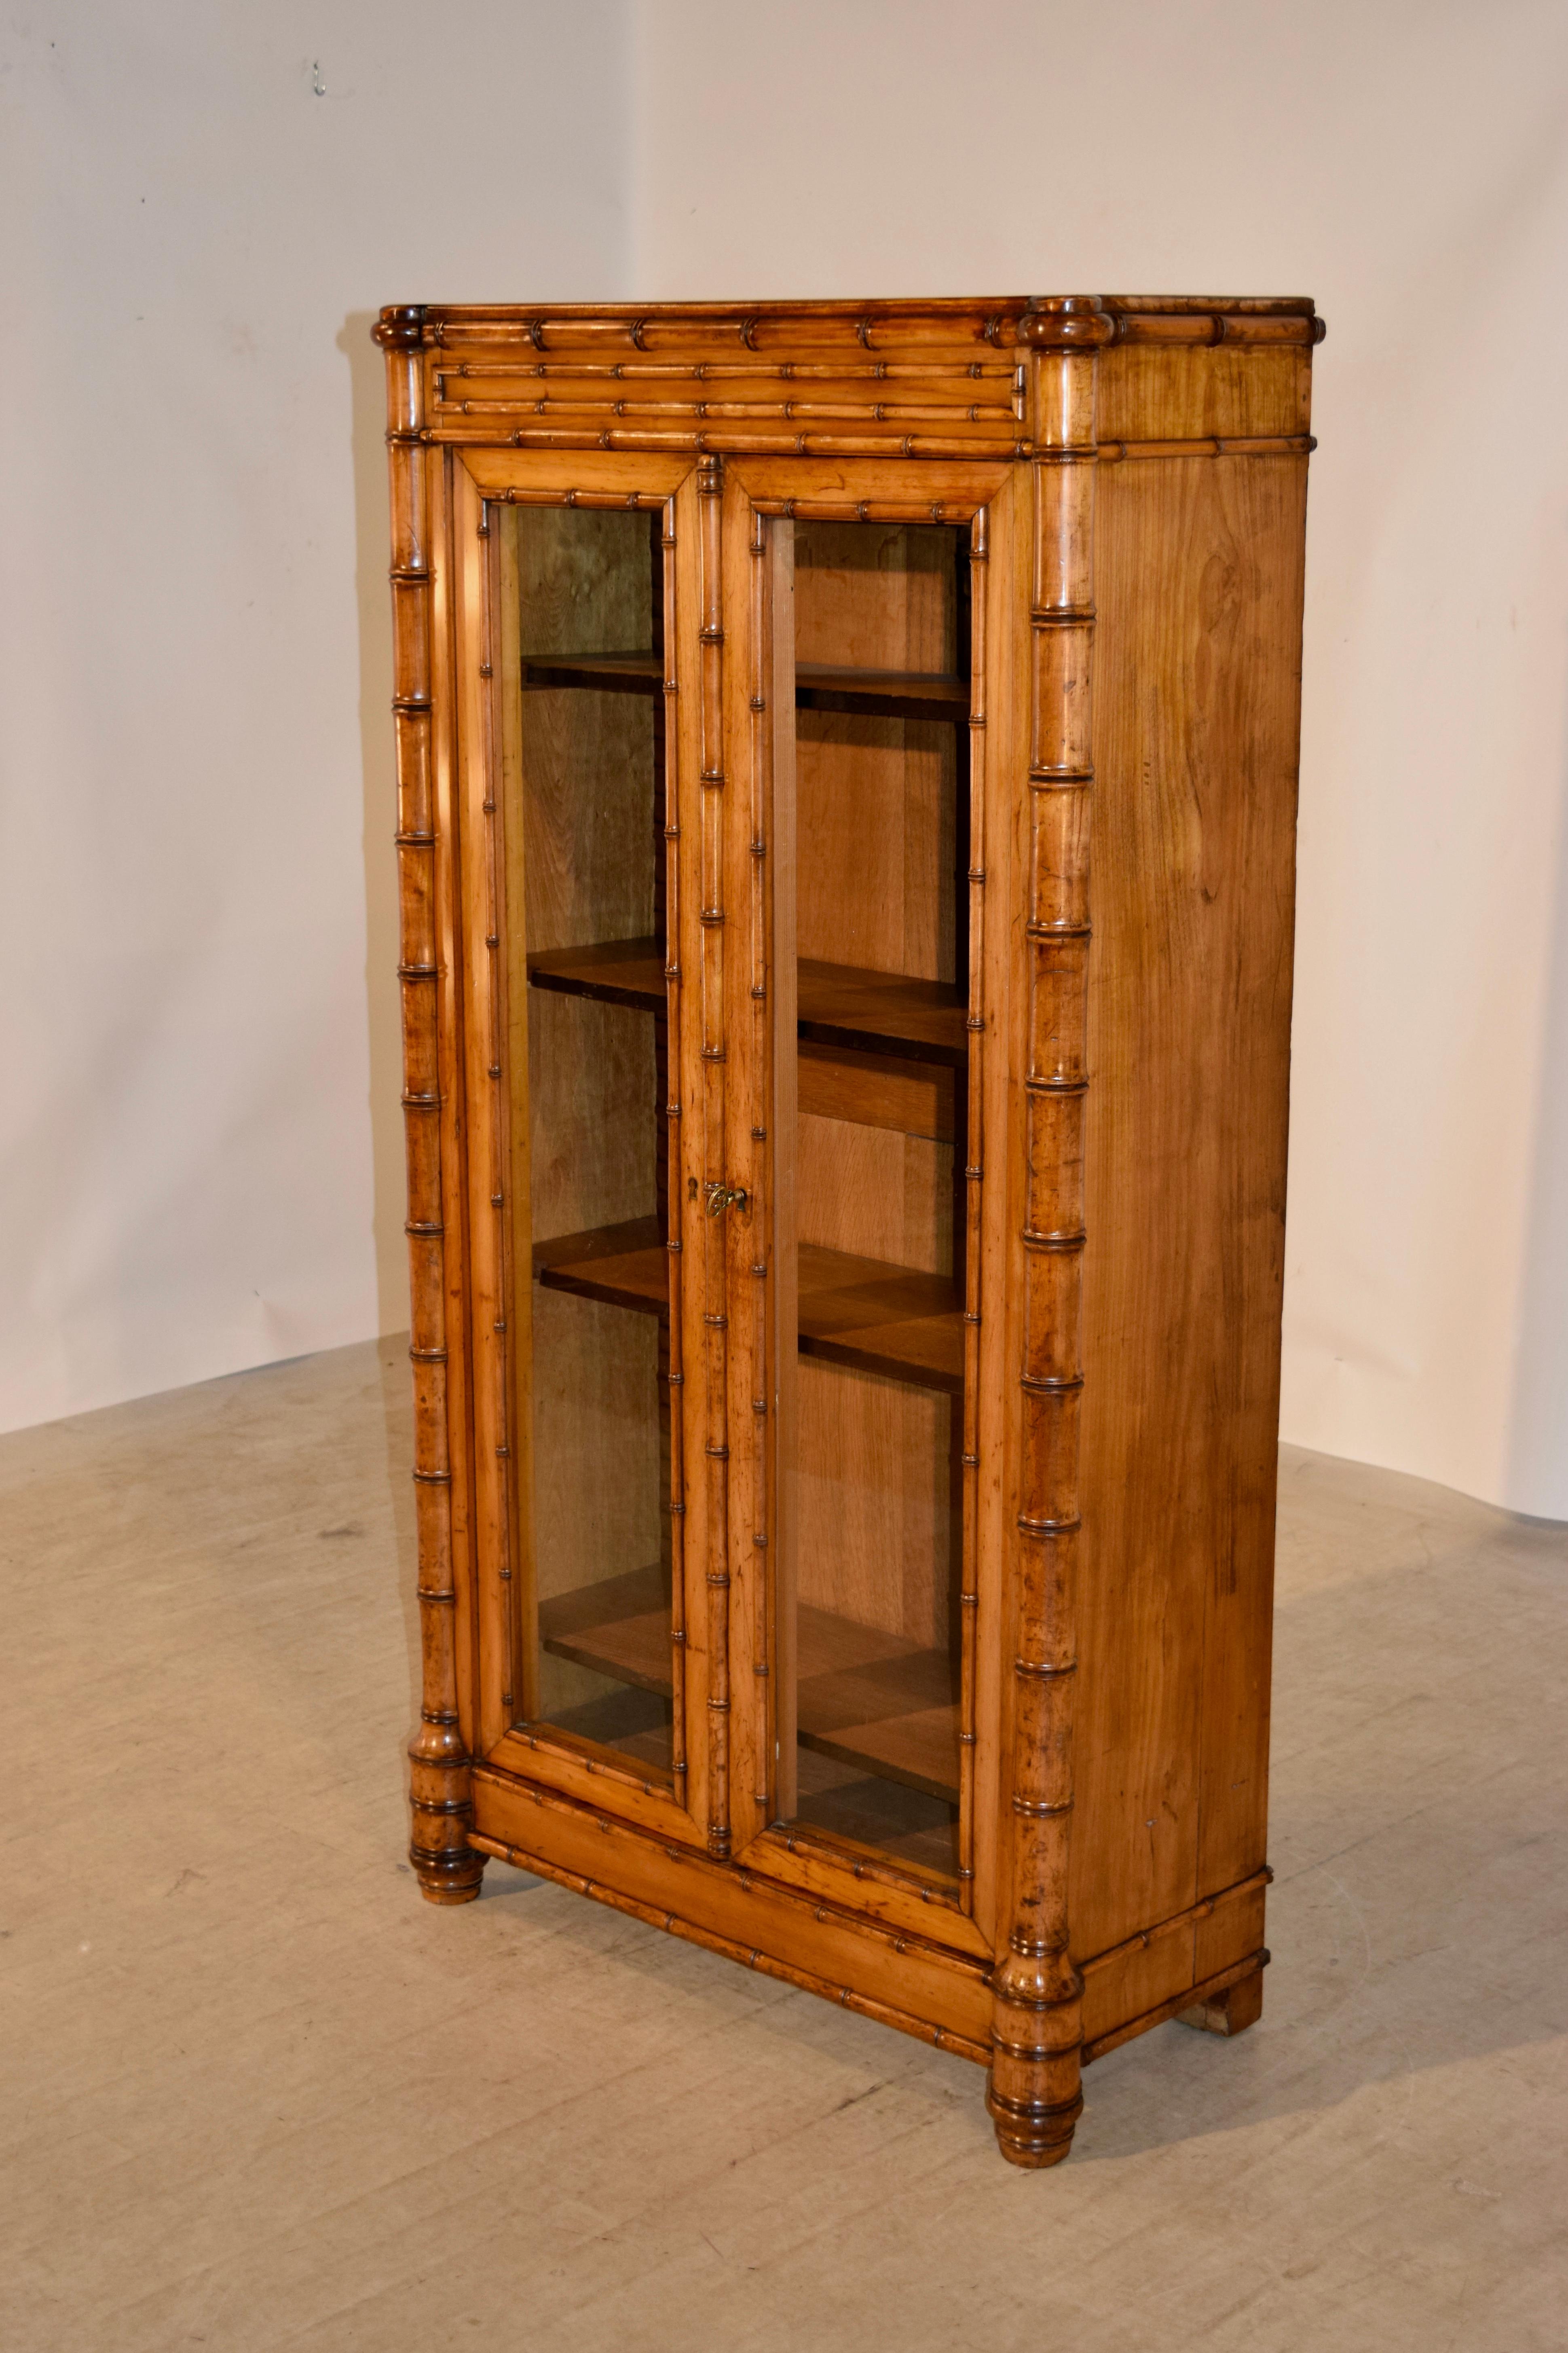 19th Century French Bookcase (Art nouveau)